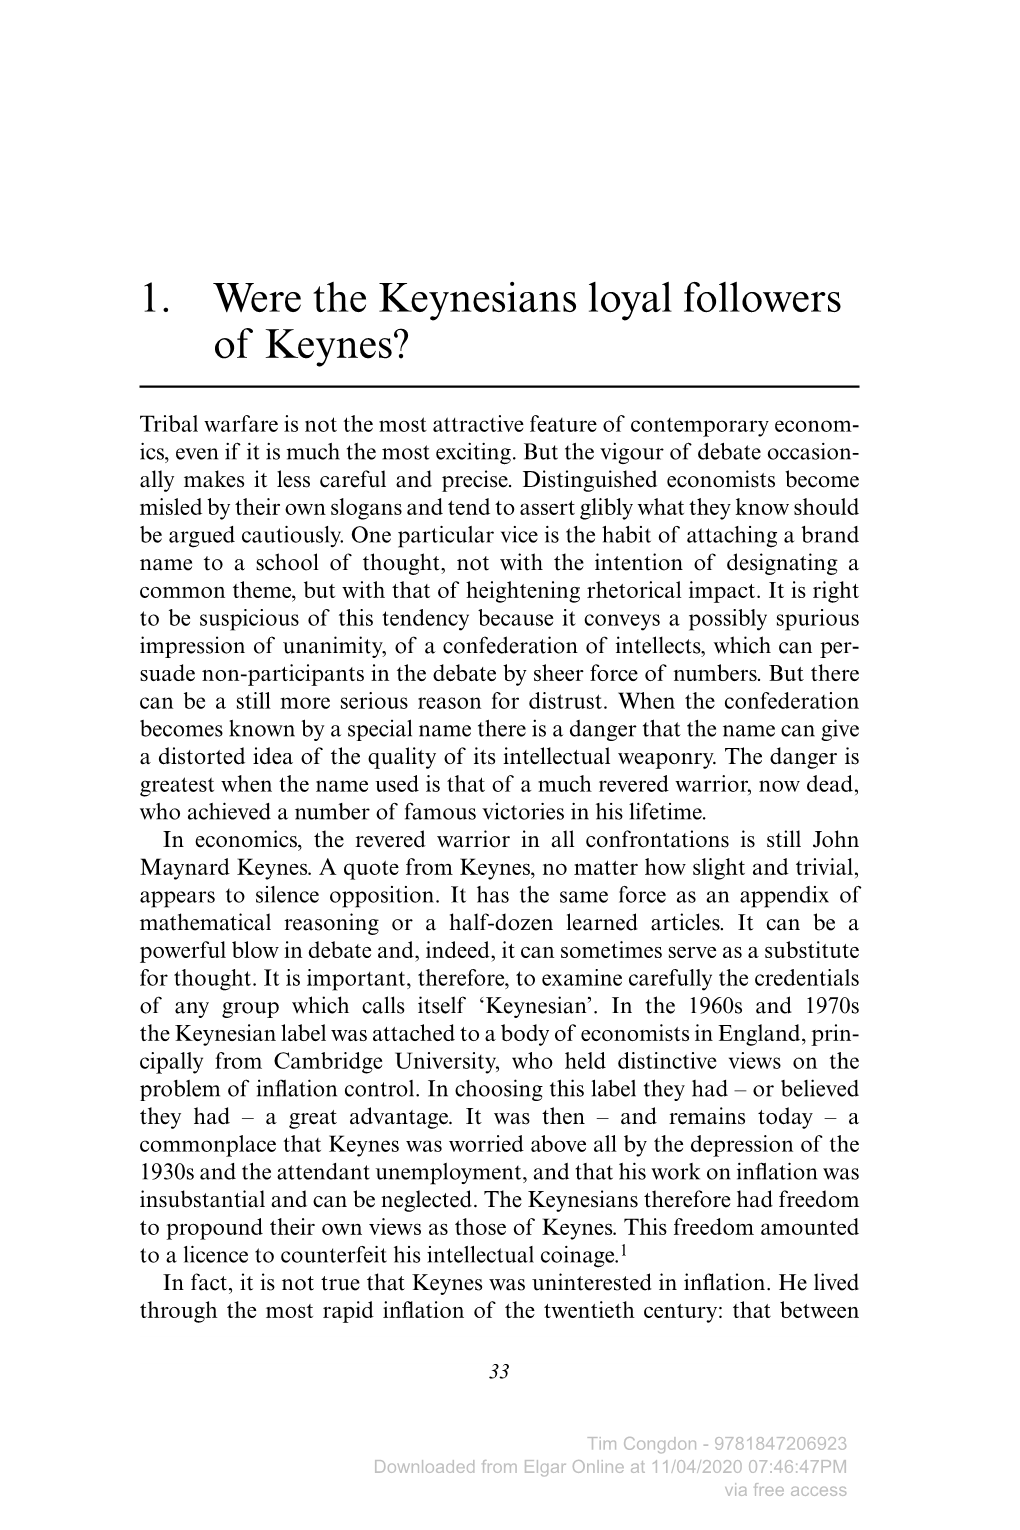 1. Were the Keynesians Loyal Followers of Keynes?